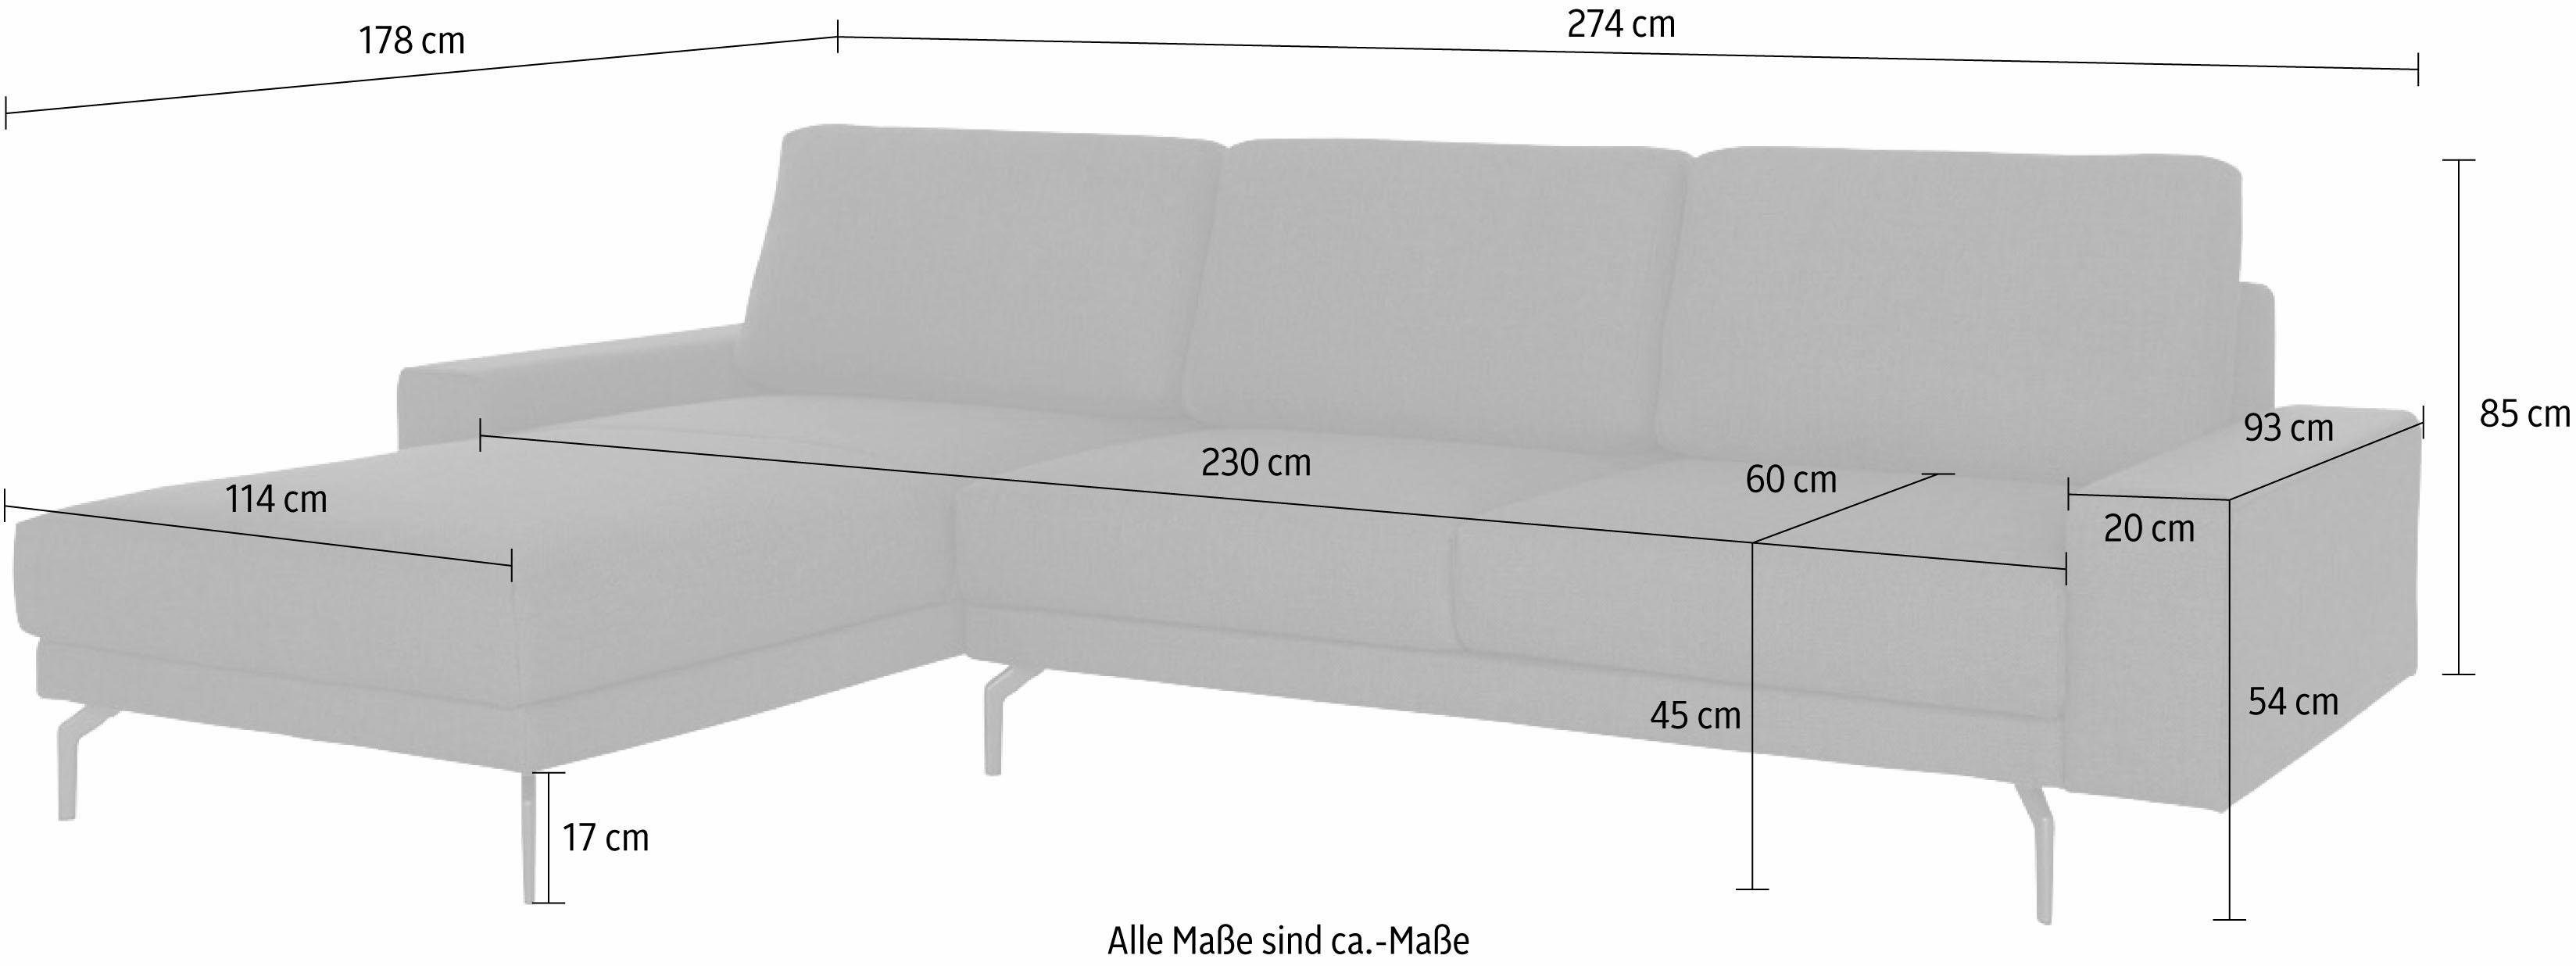 sofa Breite Ecksofa in hs.450, Armlehne umbragrau, hülsta Alugussfüße 274 cm breit und niedrig,